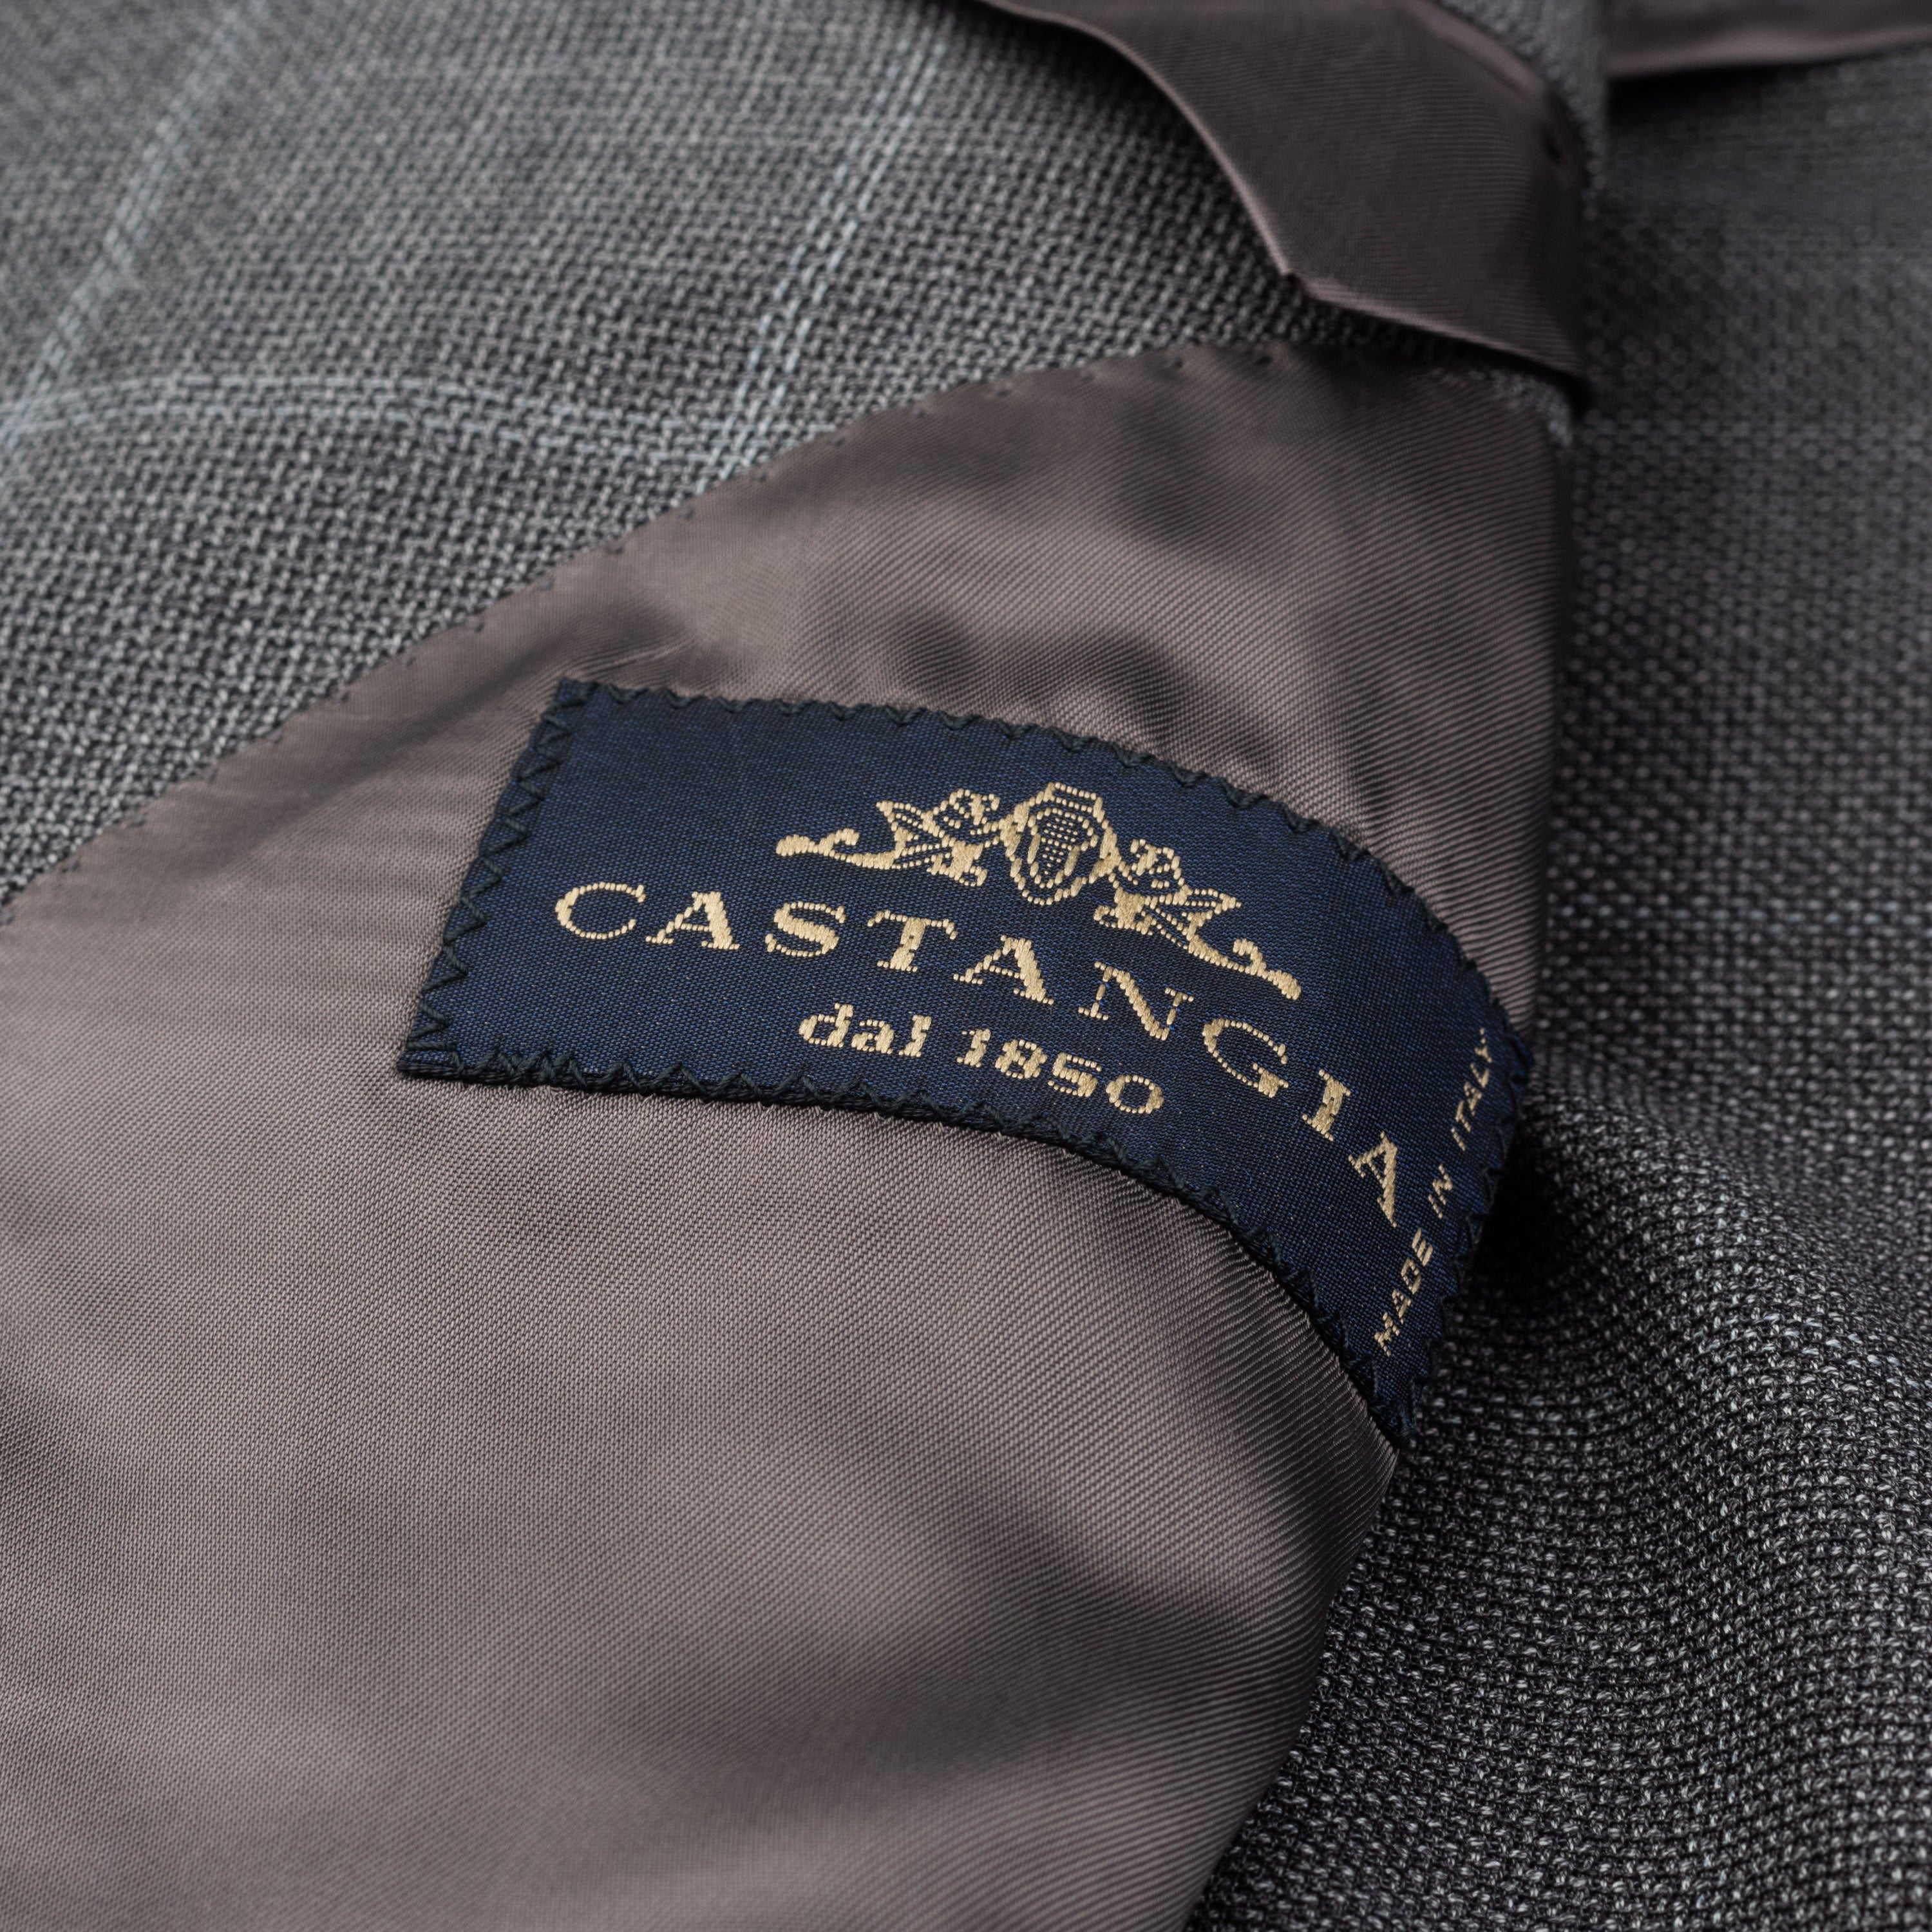 CASTANGIA 1850 Gray Plaid Wool Hopsack Sport Coat Jacket NEW CASTANGIA